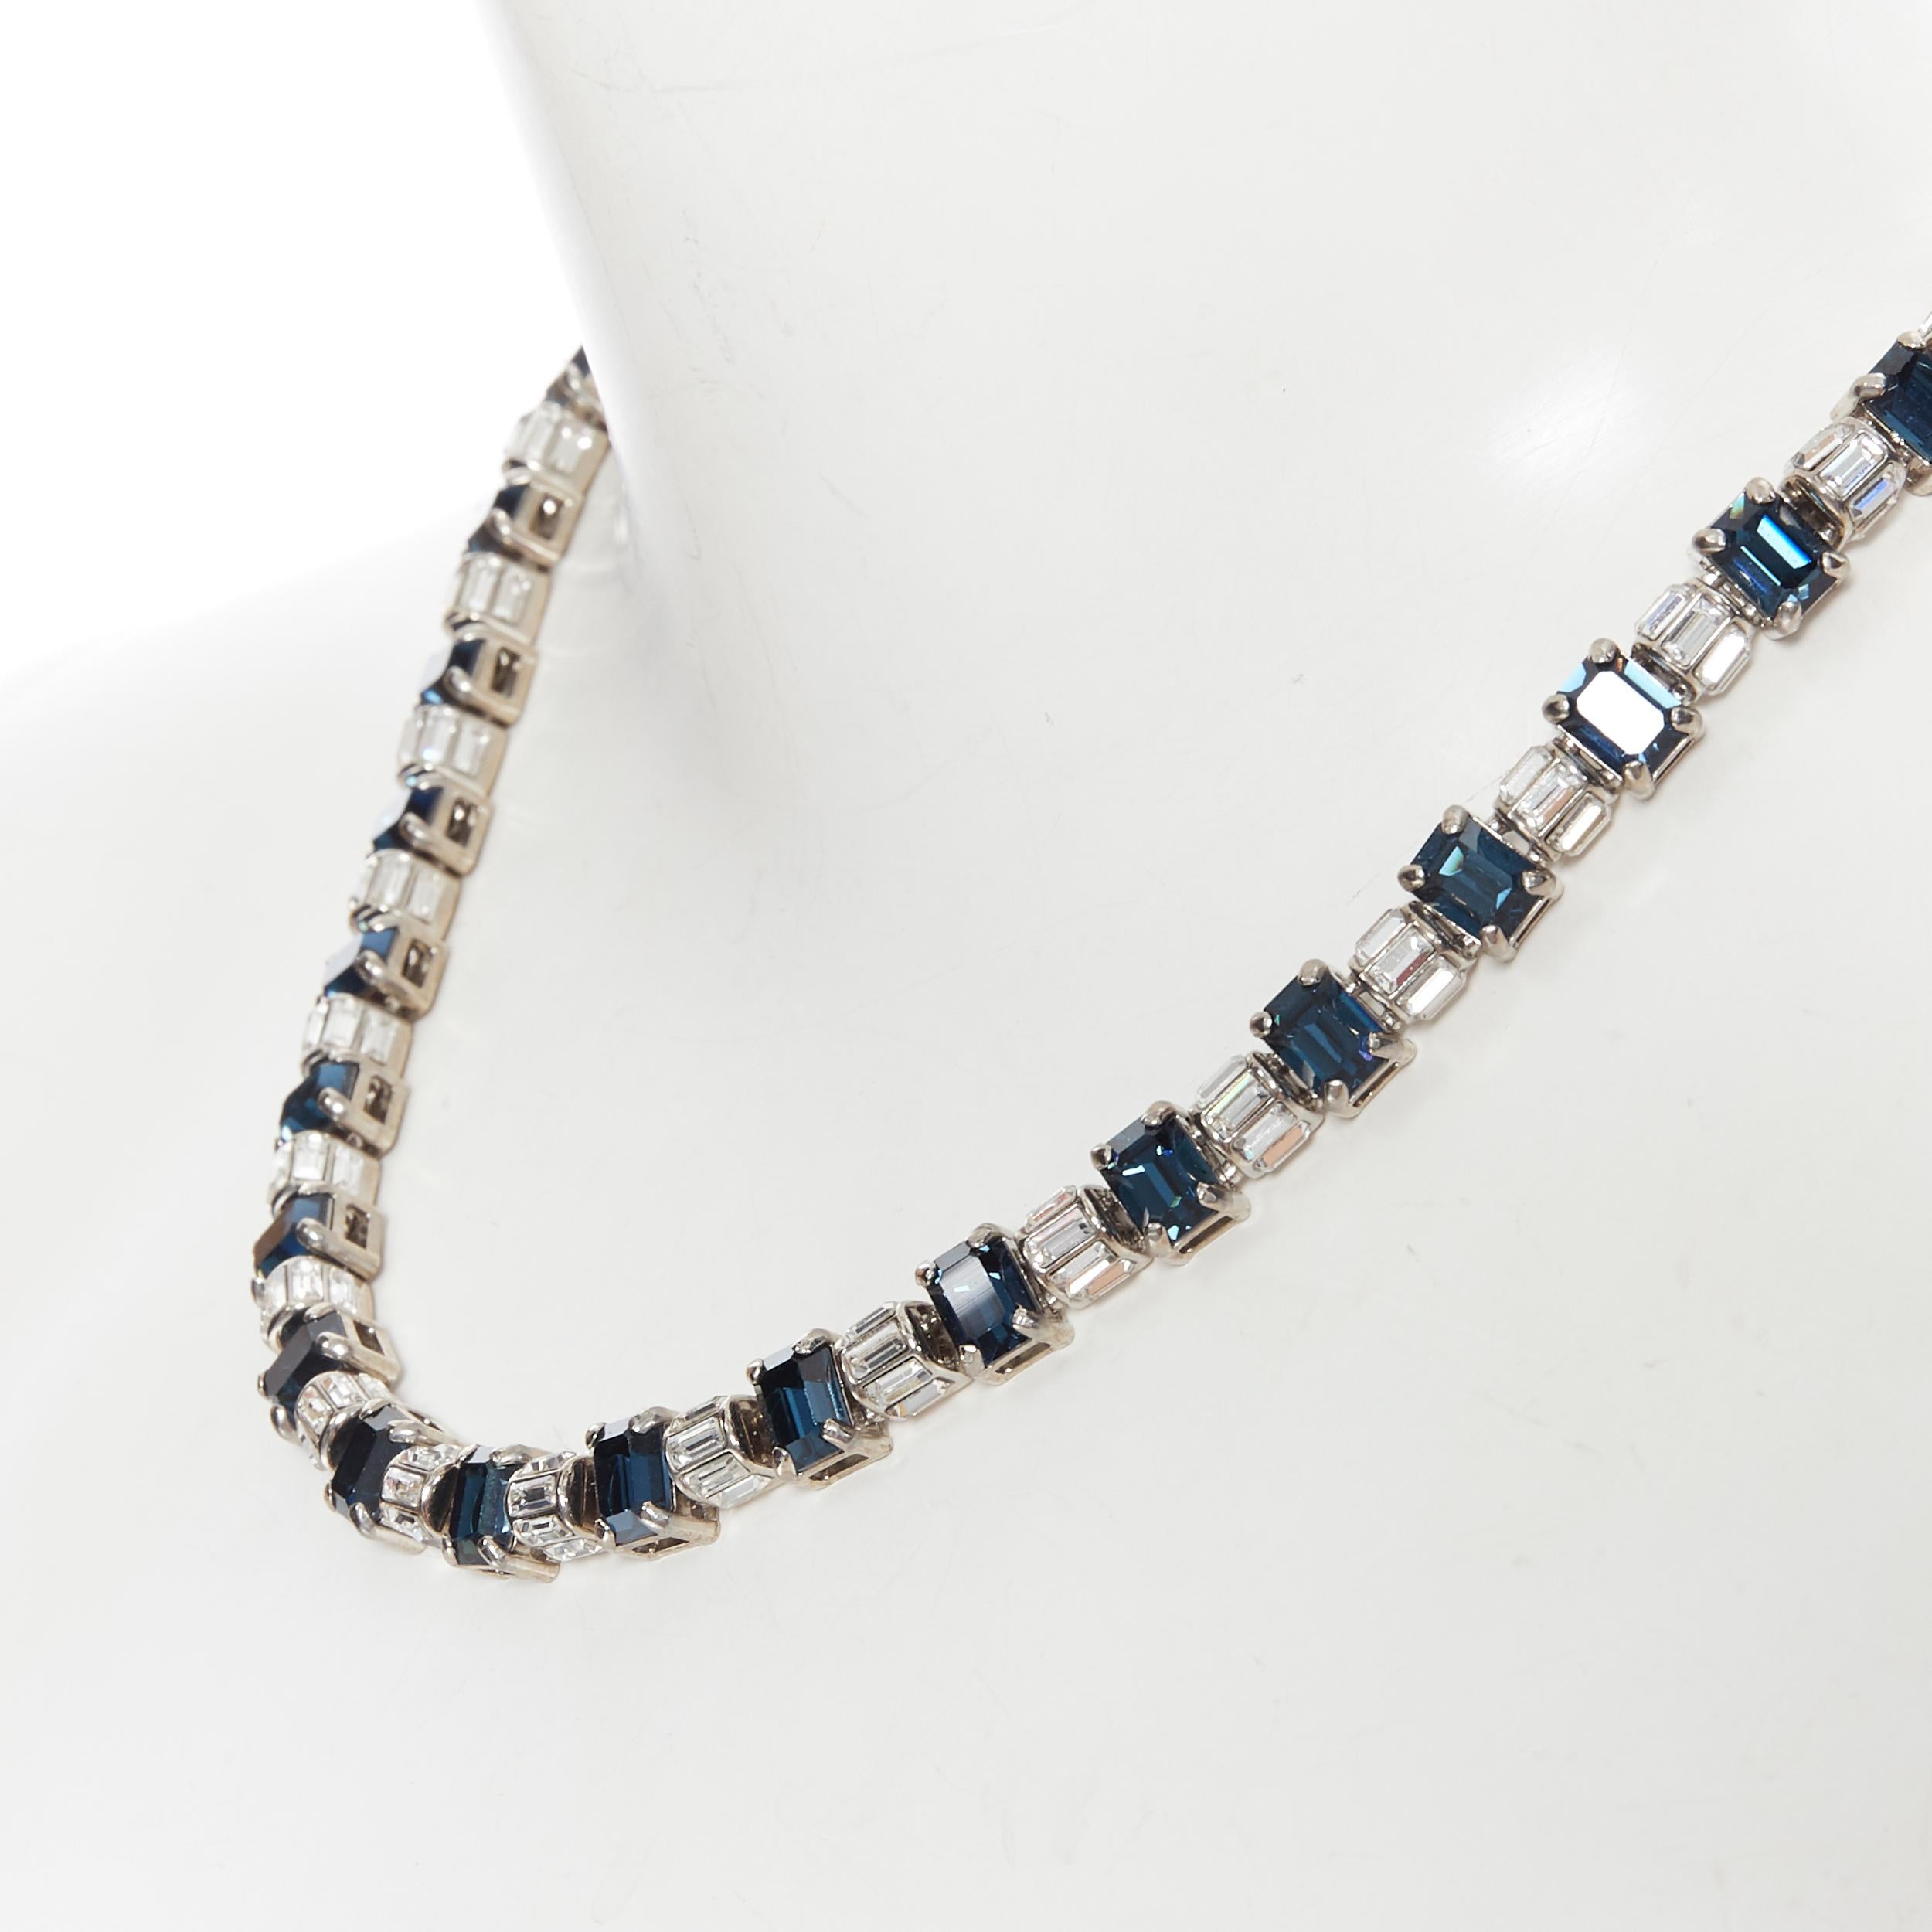 new PRADA blue faux sapphire rhinestone crystal jewel baguette fashion necklace
Brand: Prada
Designer: Miuccia Prada
Model Name / Style: Fashion jewelry
Material: Metal, crystal
Color: Blue
Pattern: Solid
Closure: Clasp
Extra Detail: Fashion